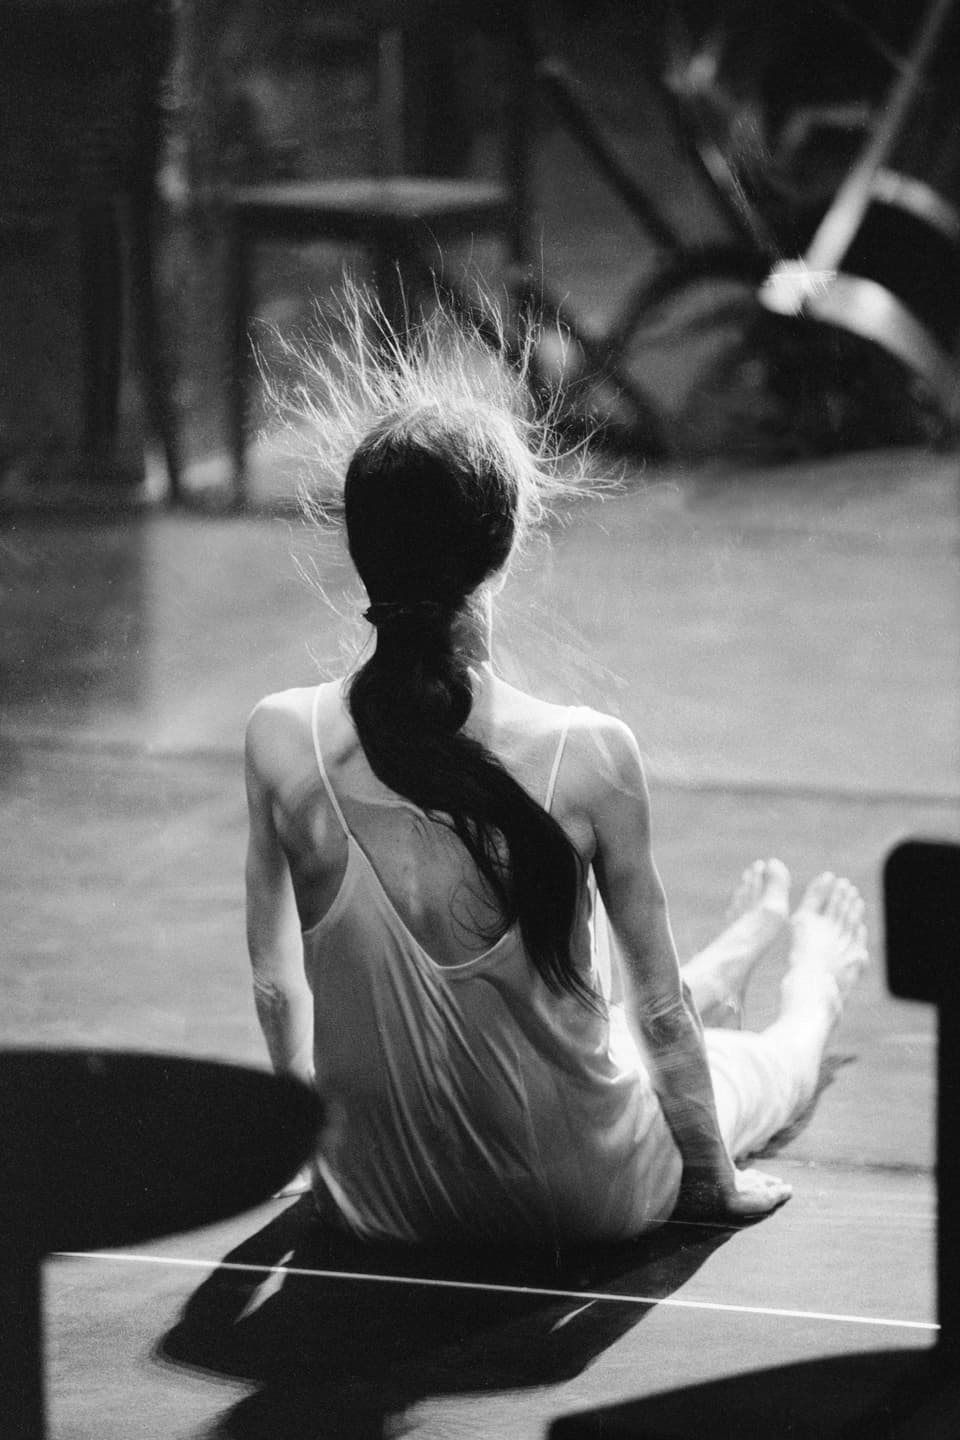 Die deutsche Tänzerin und Choreografin Pina Bausch tanzt in der Stück Café Müller am Festival d’Avignon ’95 im Cour d’honneur du palais des papes, Avignon, Juli 1995.